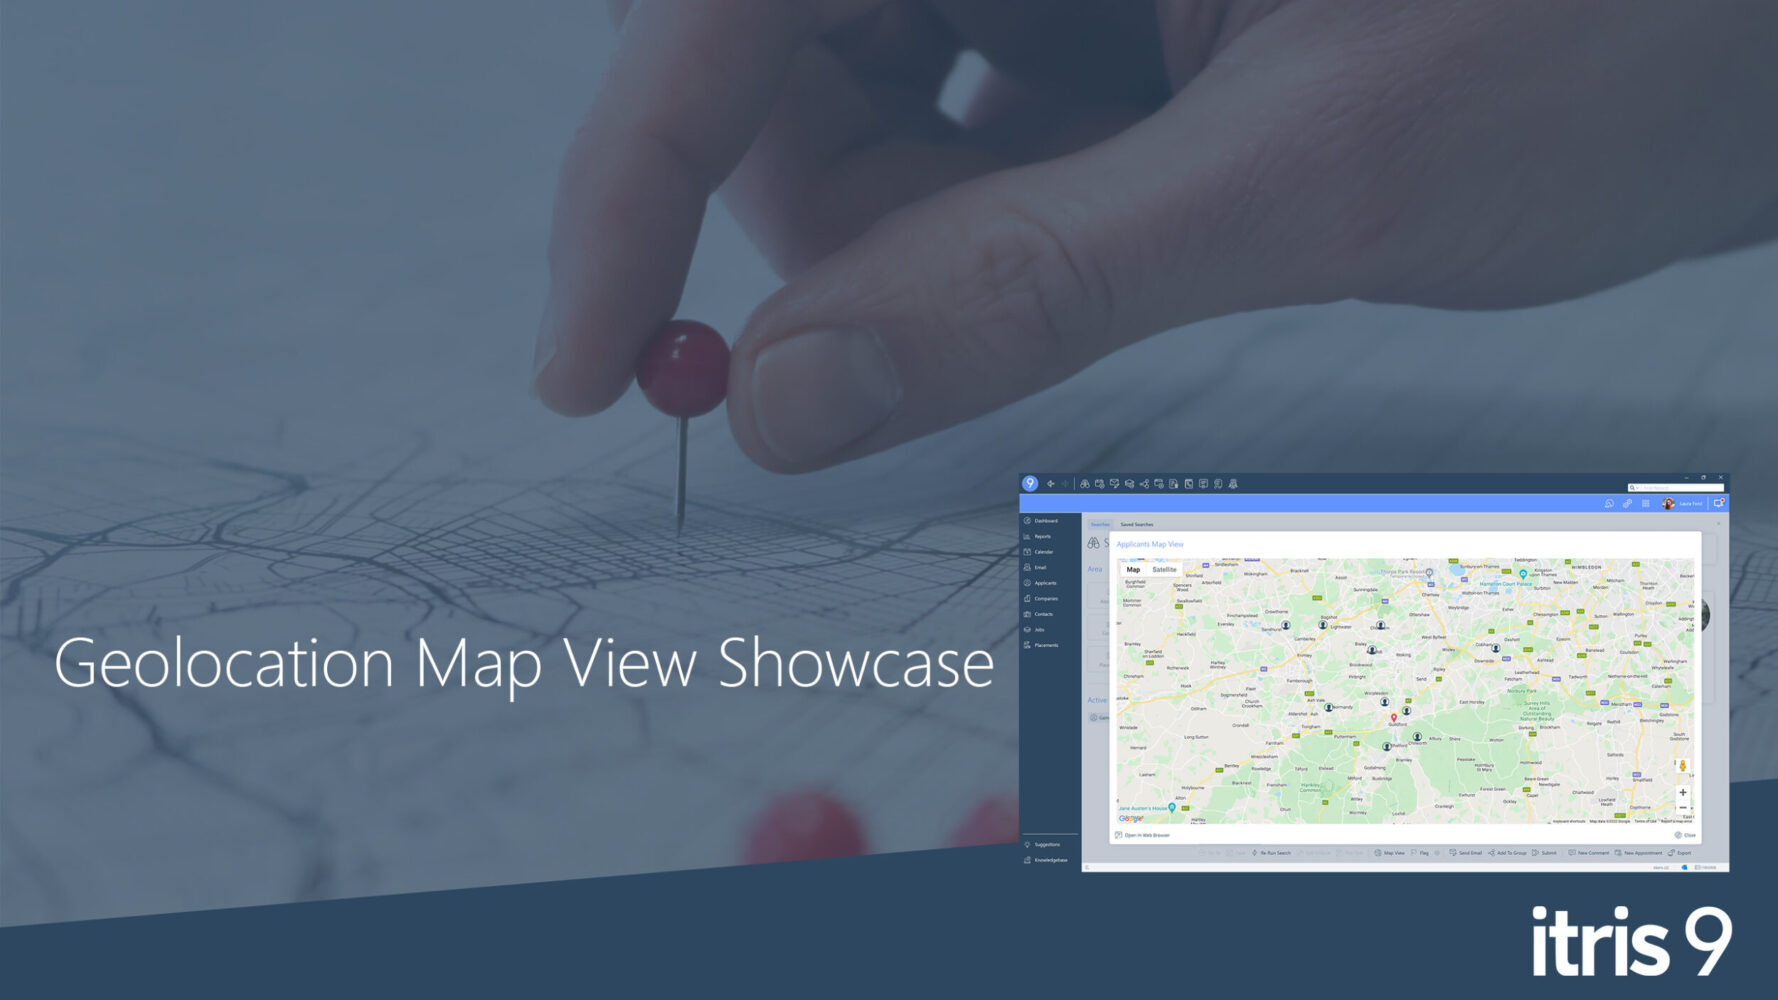 Recruitment CRM software itris 9 | Maps | Showcase Video